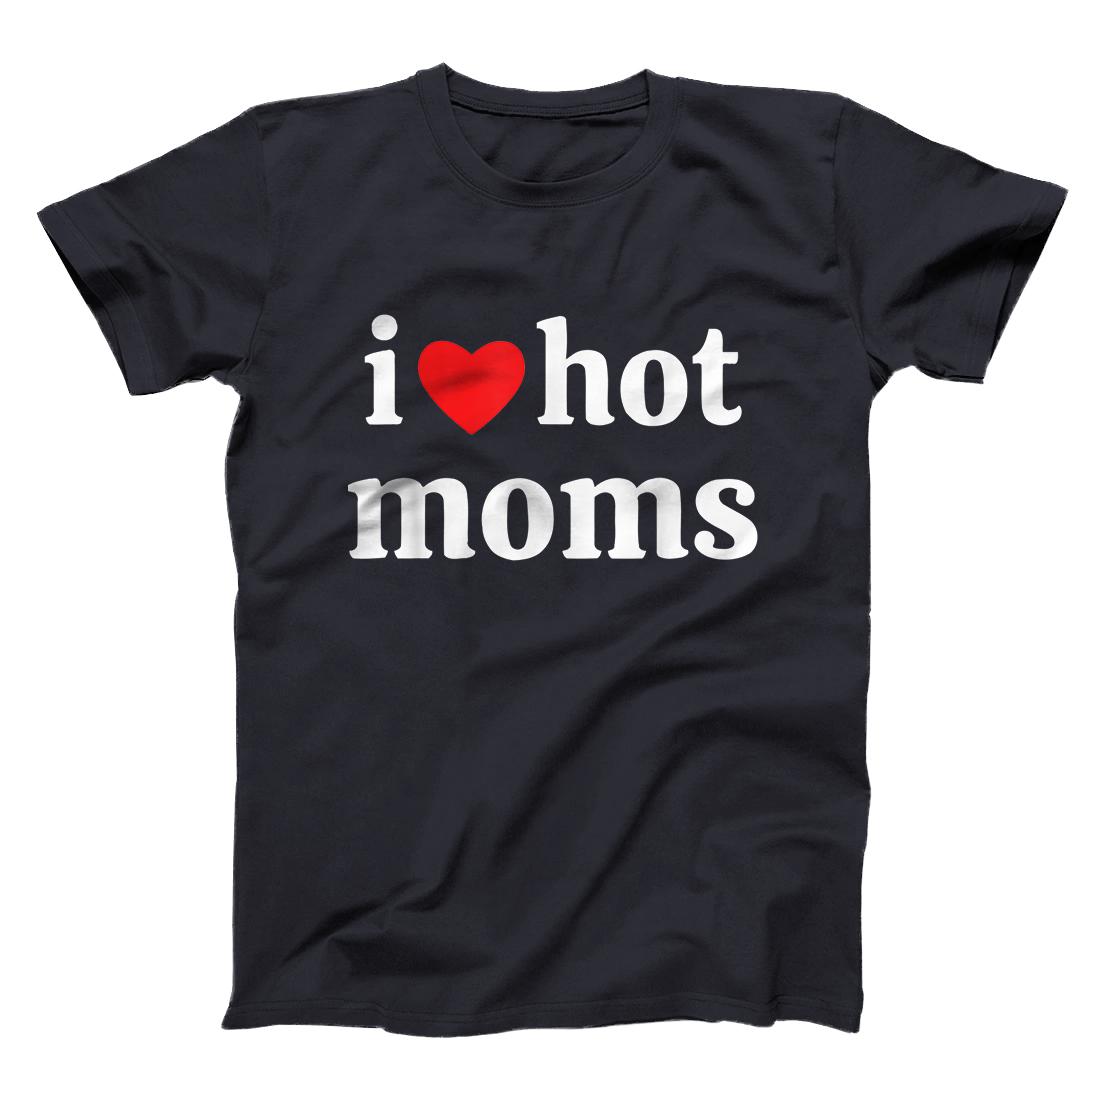 I Love Hot Moms Tshirt Funny Red Heart Love Moms T Shirt All Star Shirt 